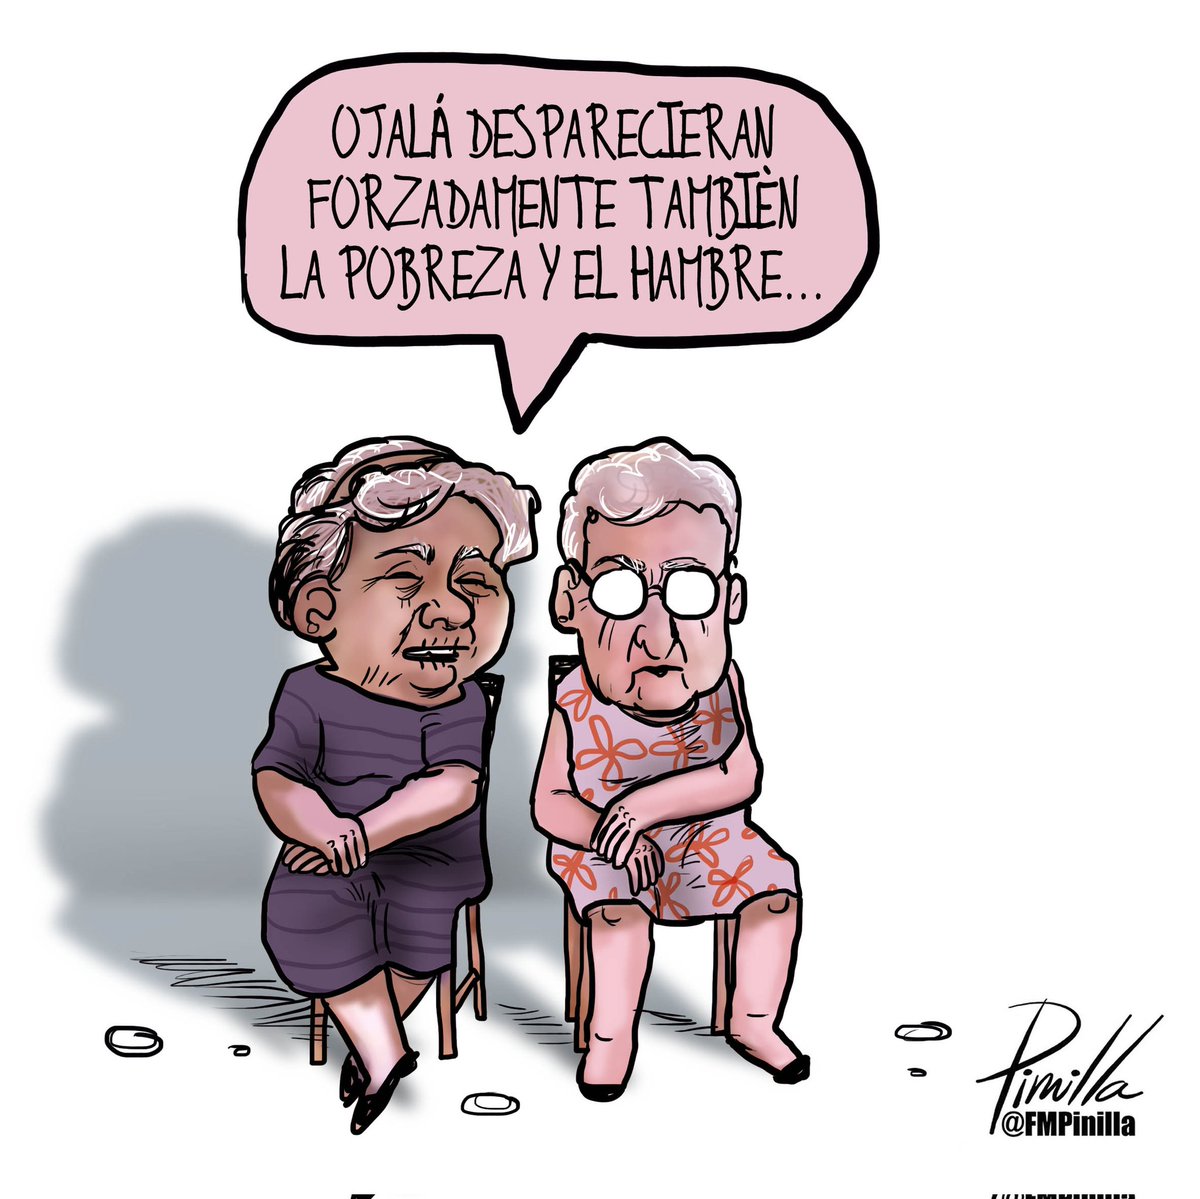 Desparecer forzadamente...
•
#caricatura para @elnacionalweb 
•
#caricatura #cartoon #Venezuela #venezolanos #politicalcartoon